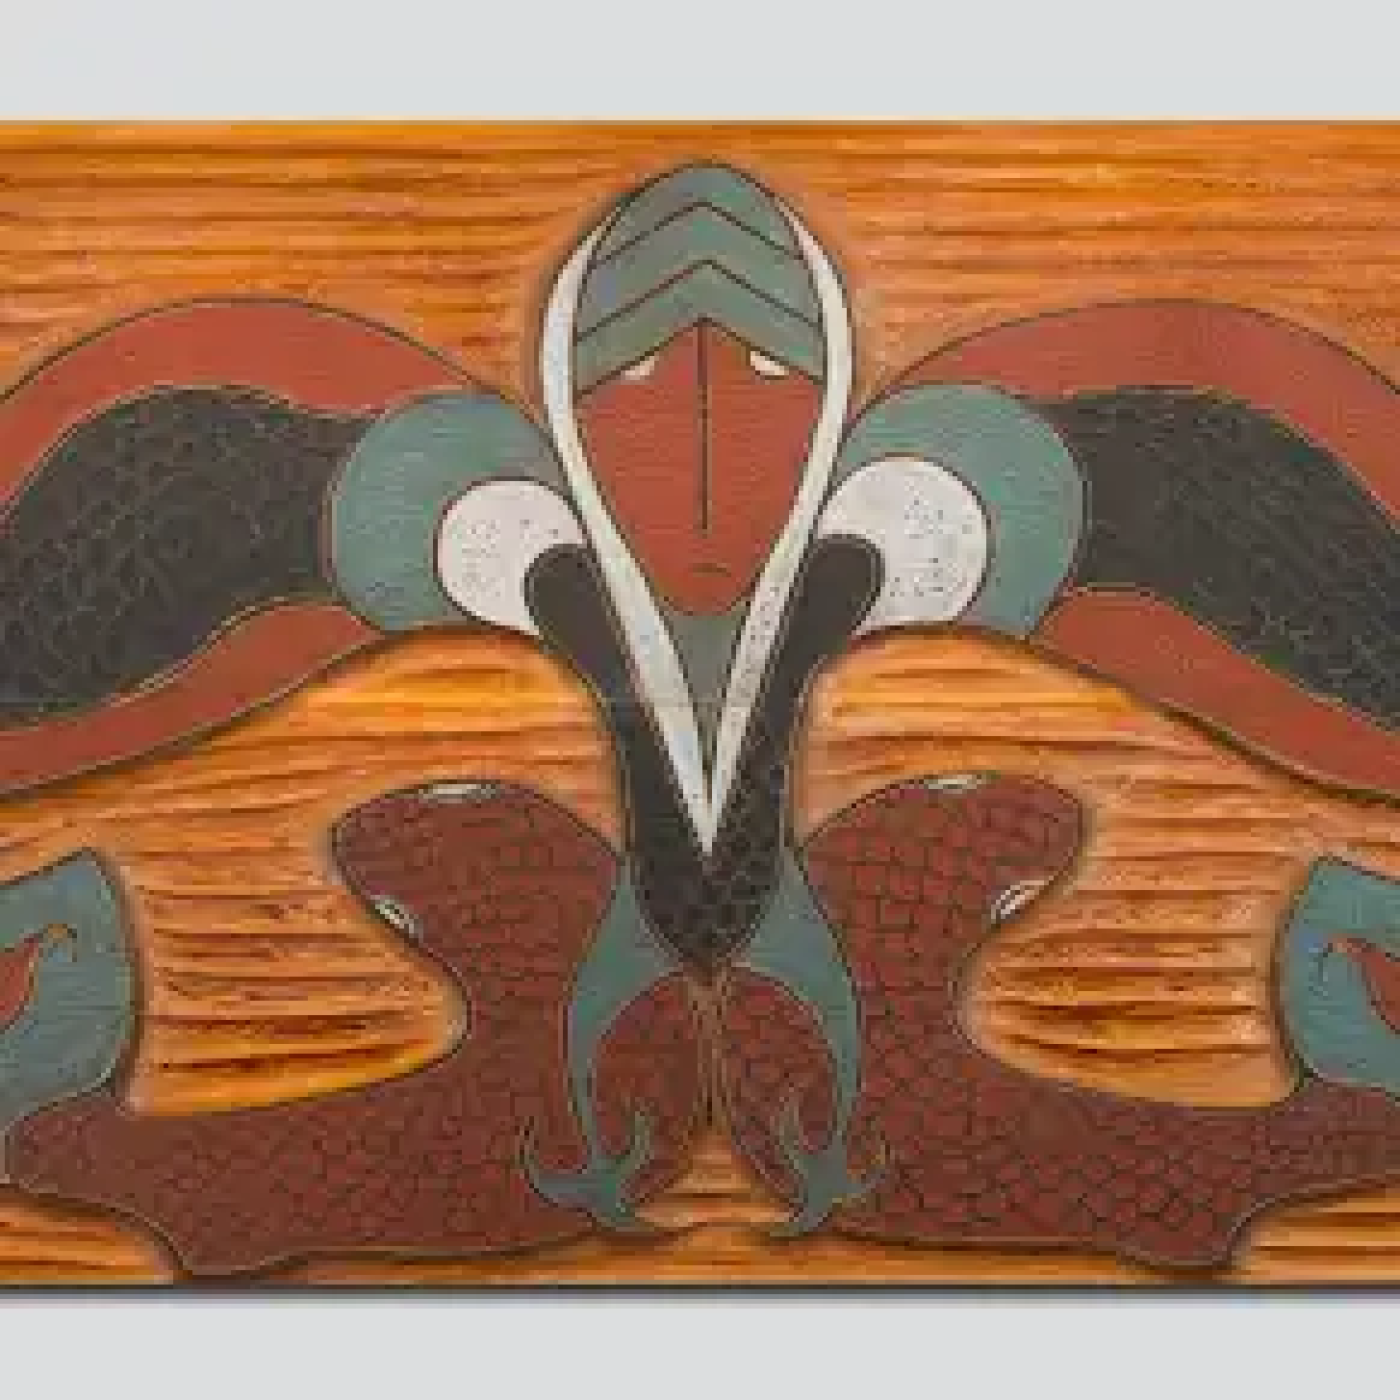 "Yahtee the Creator" Wooden Spirit Board Panel (c. 1967) by John Jay Hoover.